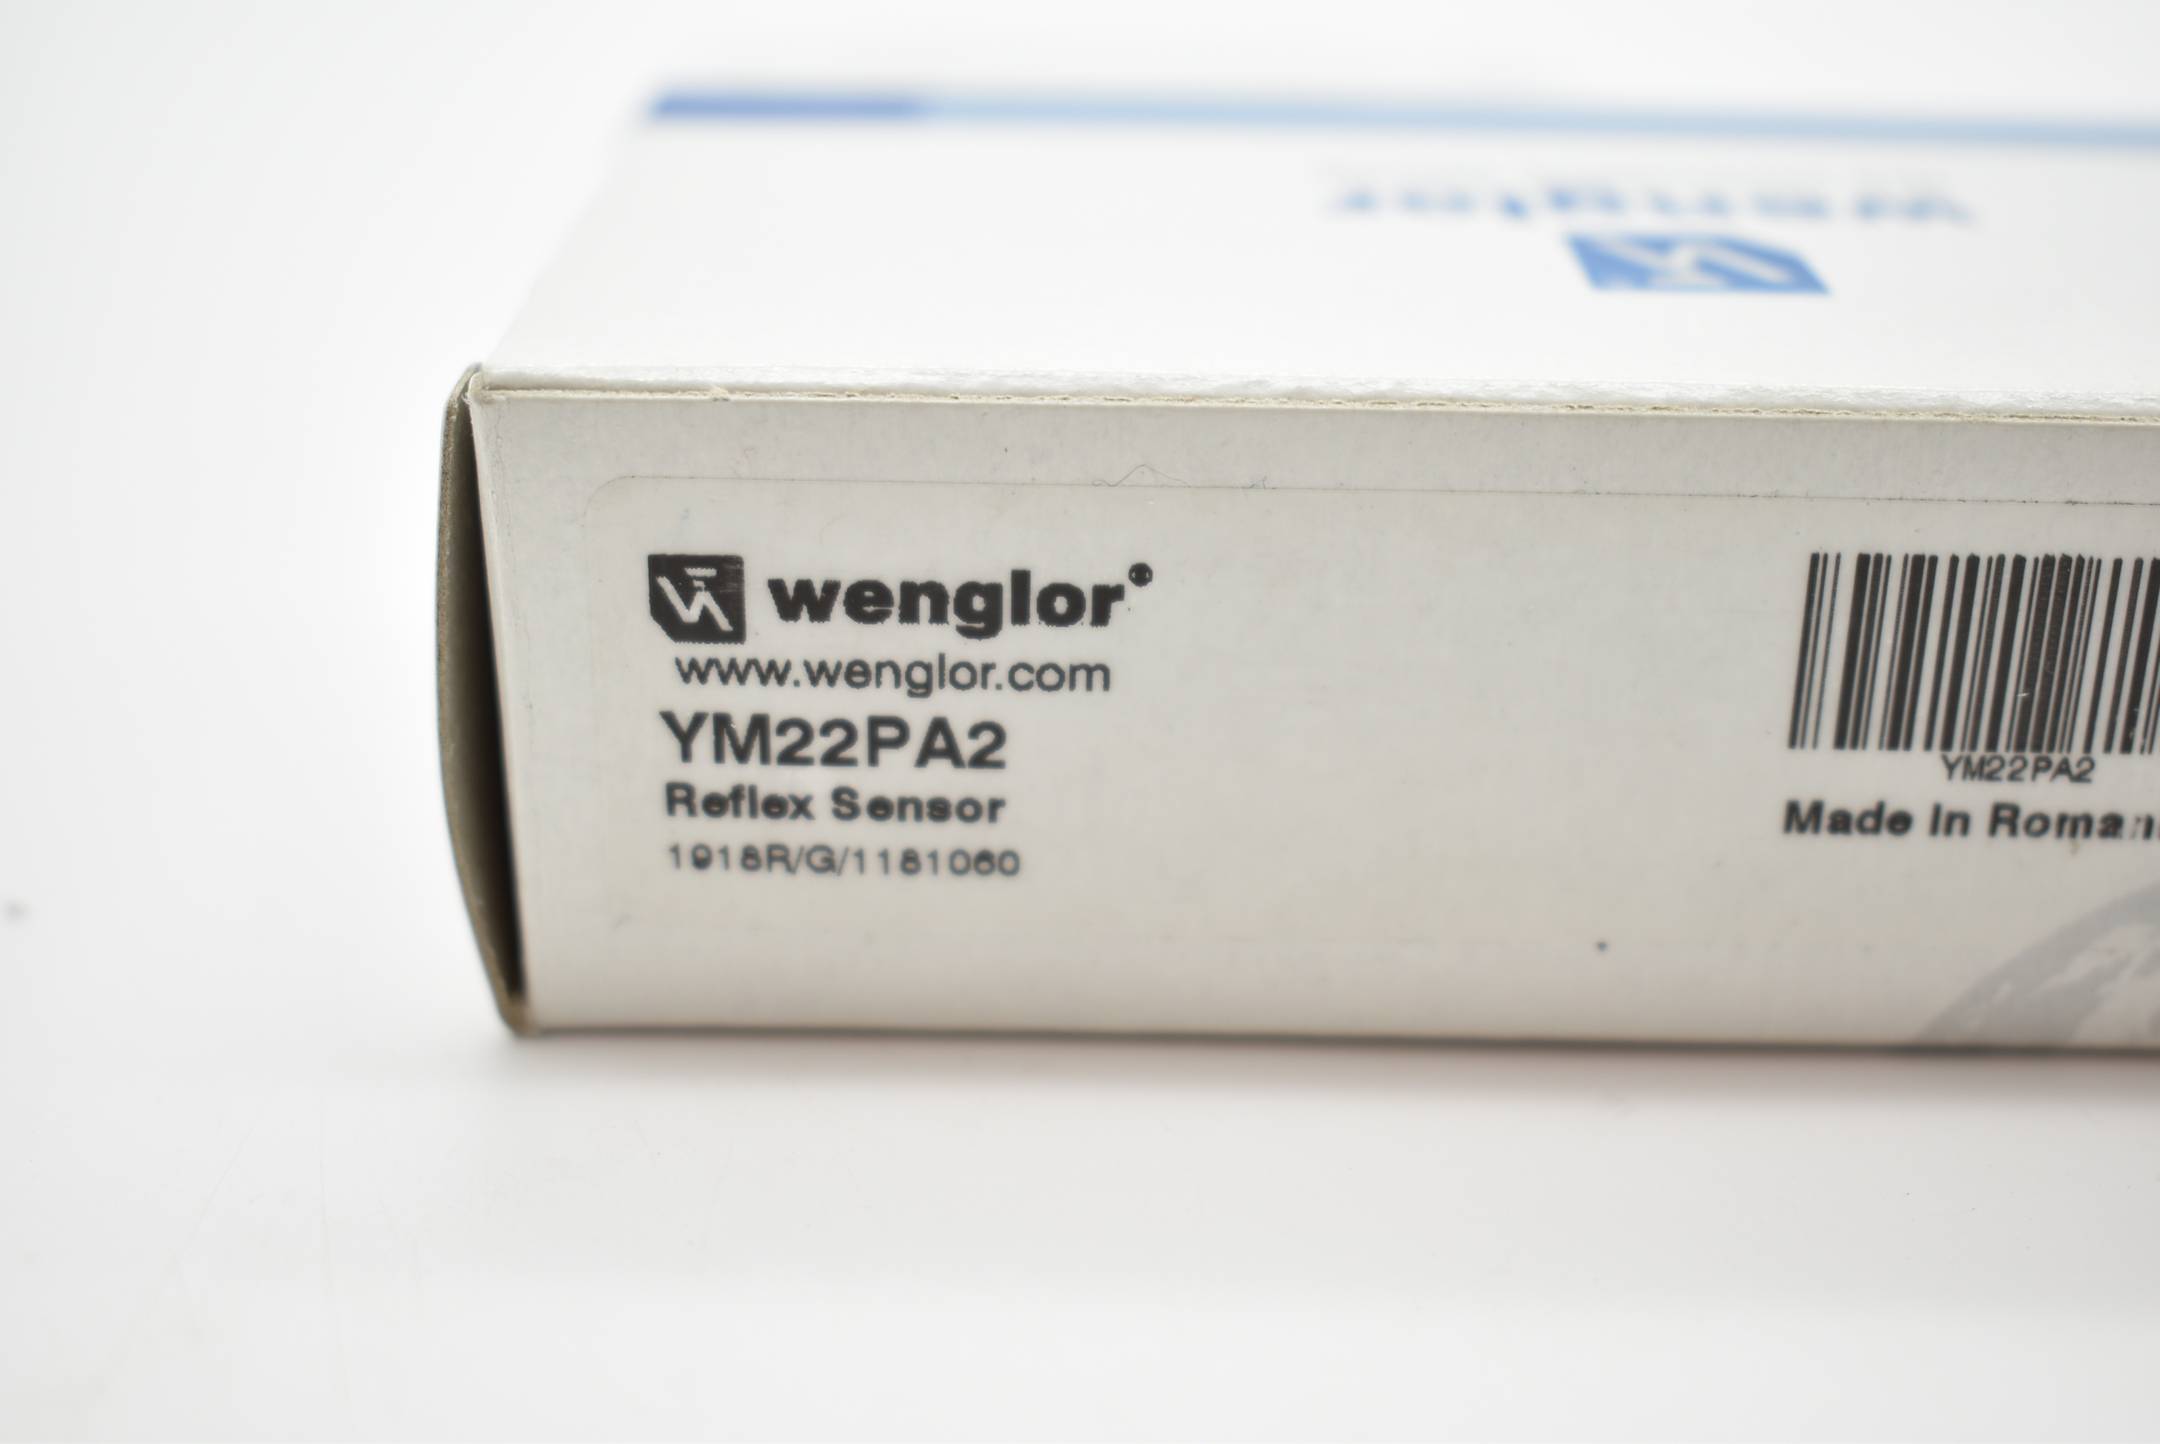 Wenglor Reflex Sensor YM22PA2